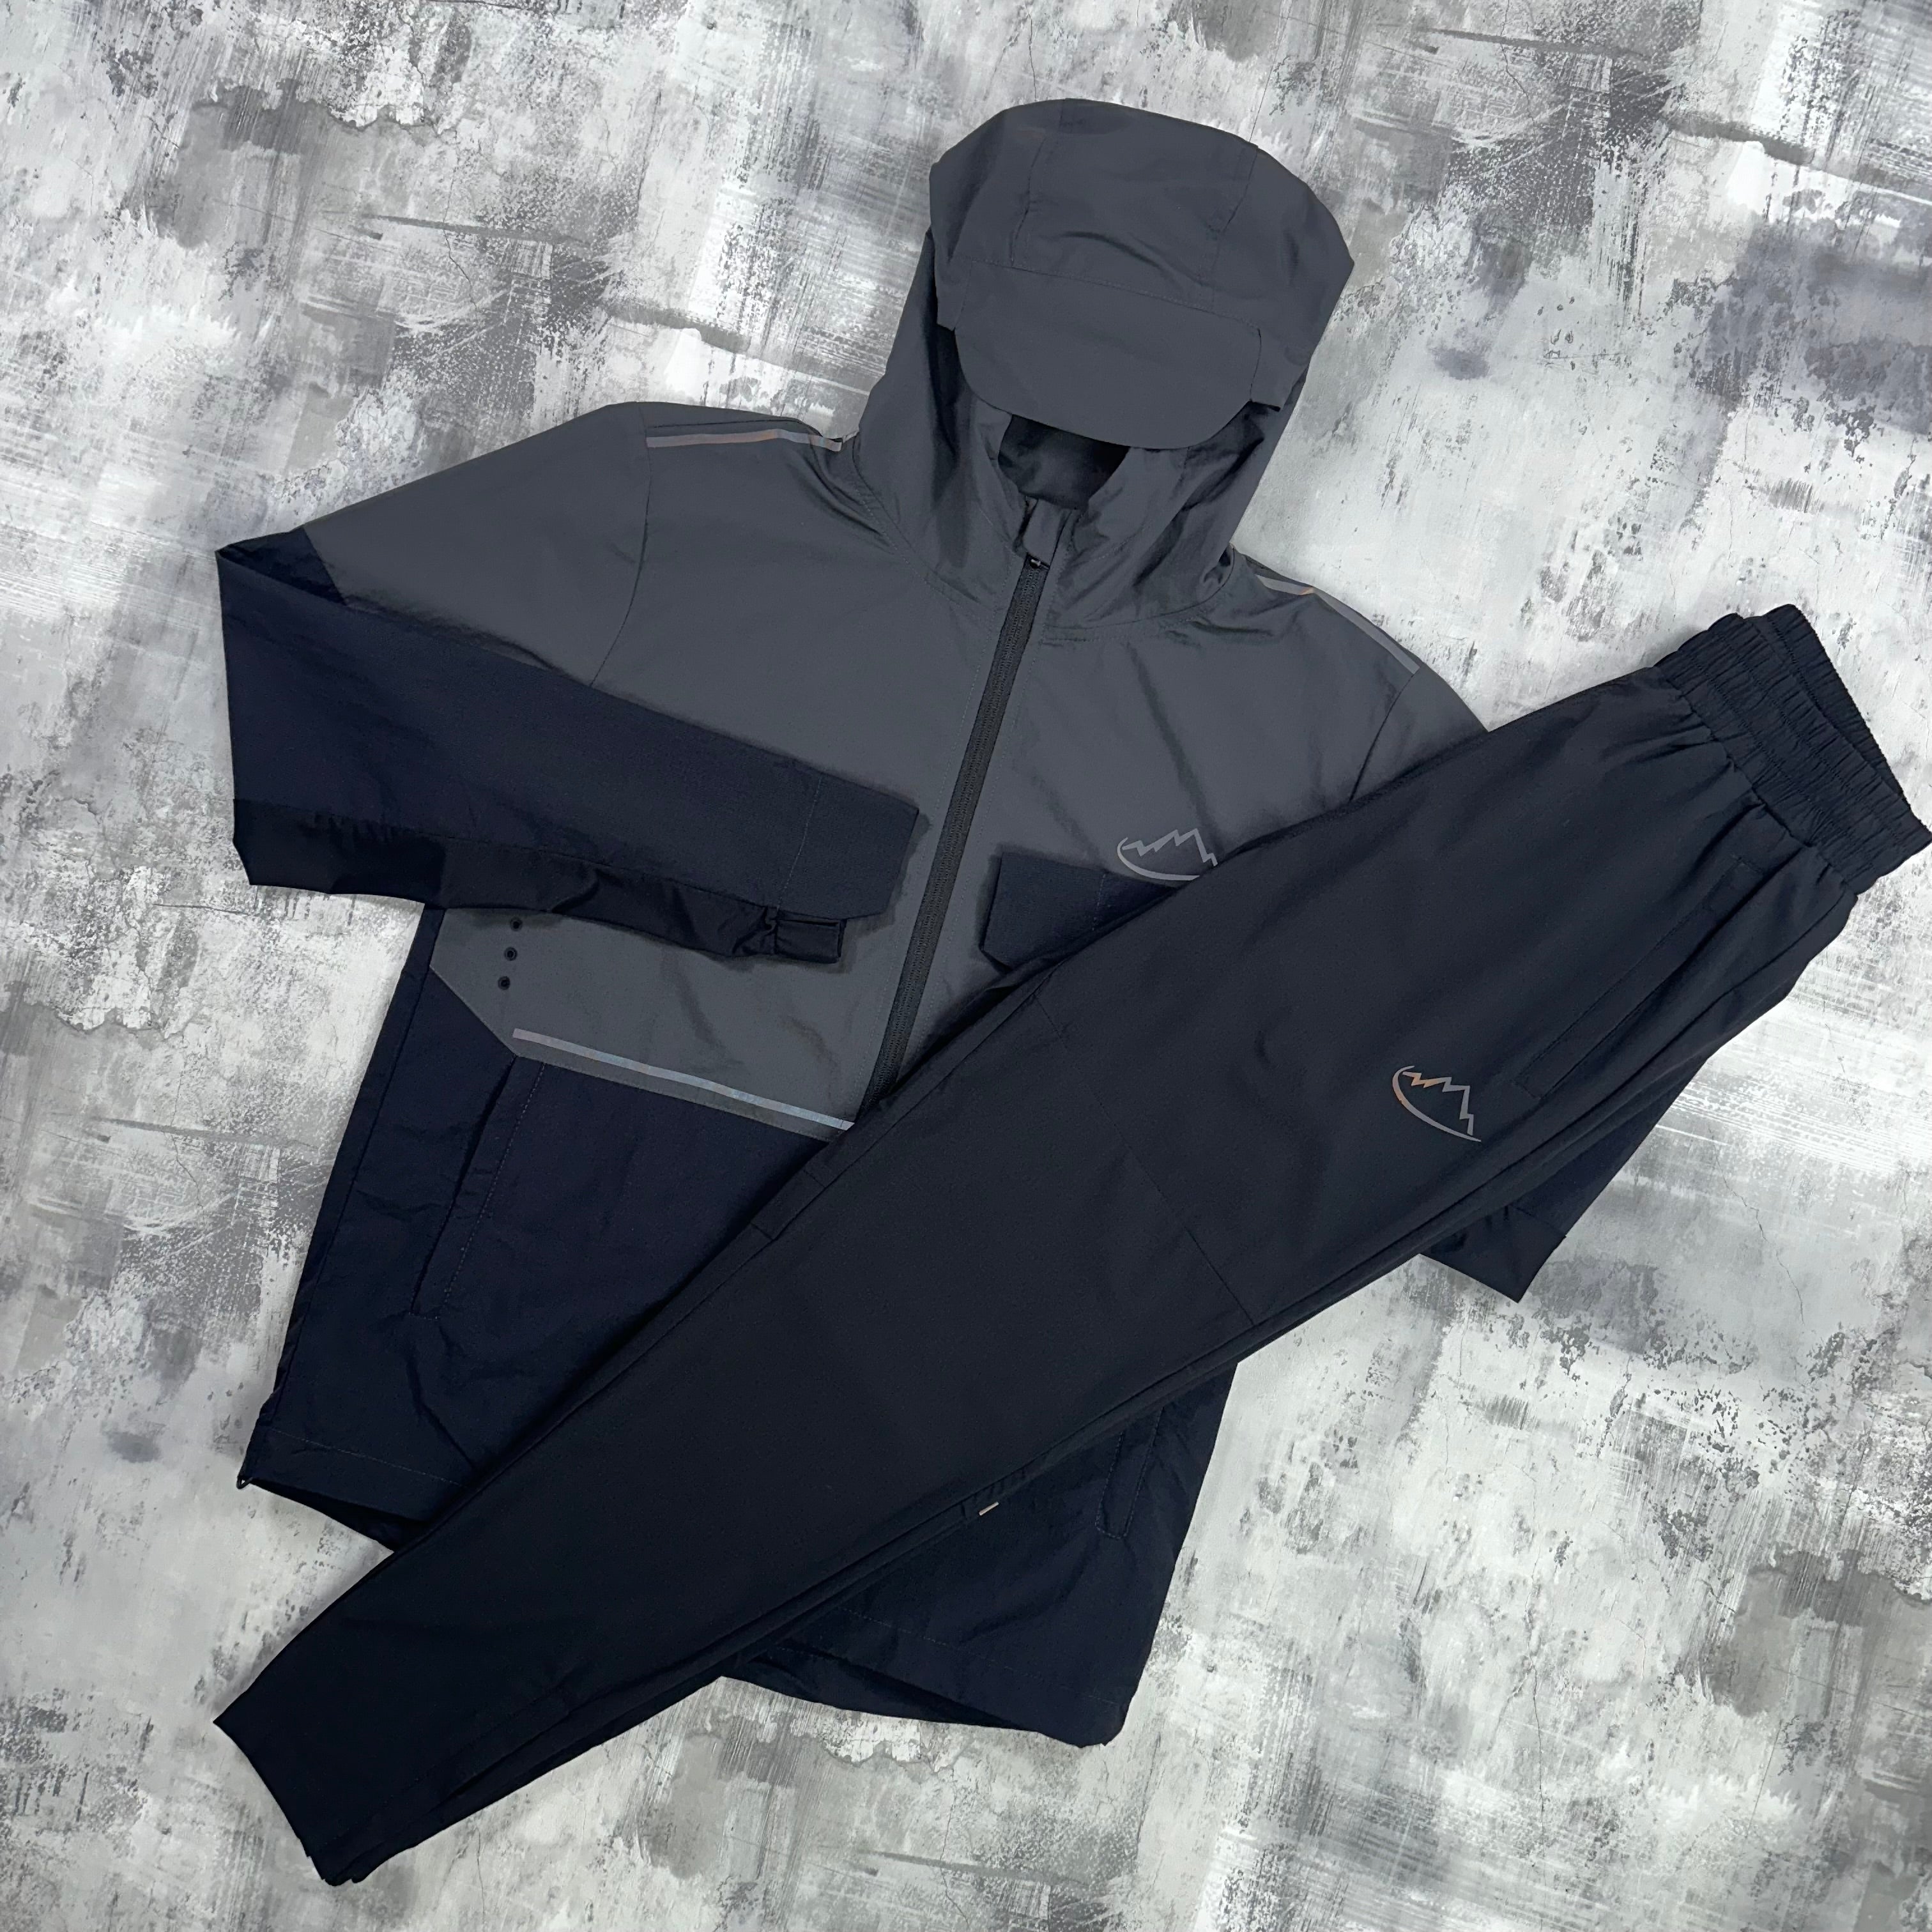 Adapt To Black / Grey Pro Max Set - Jacket & Trousers